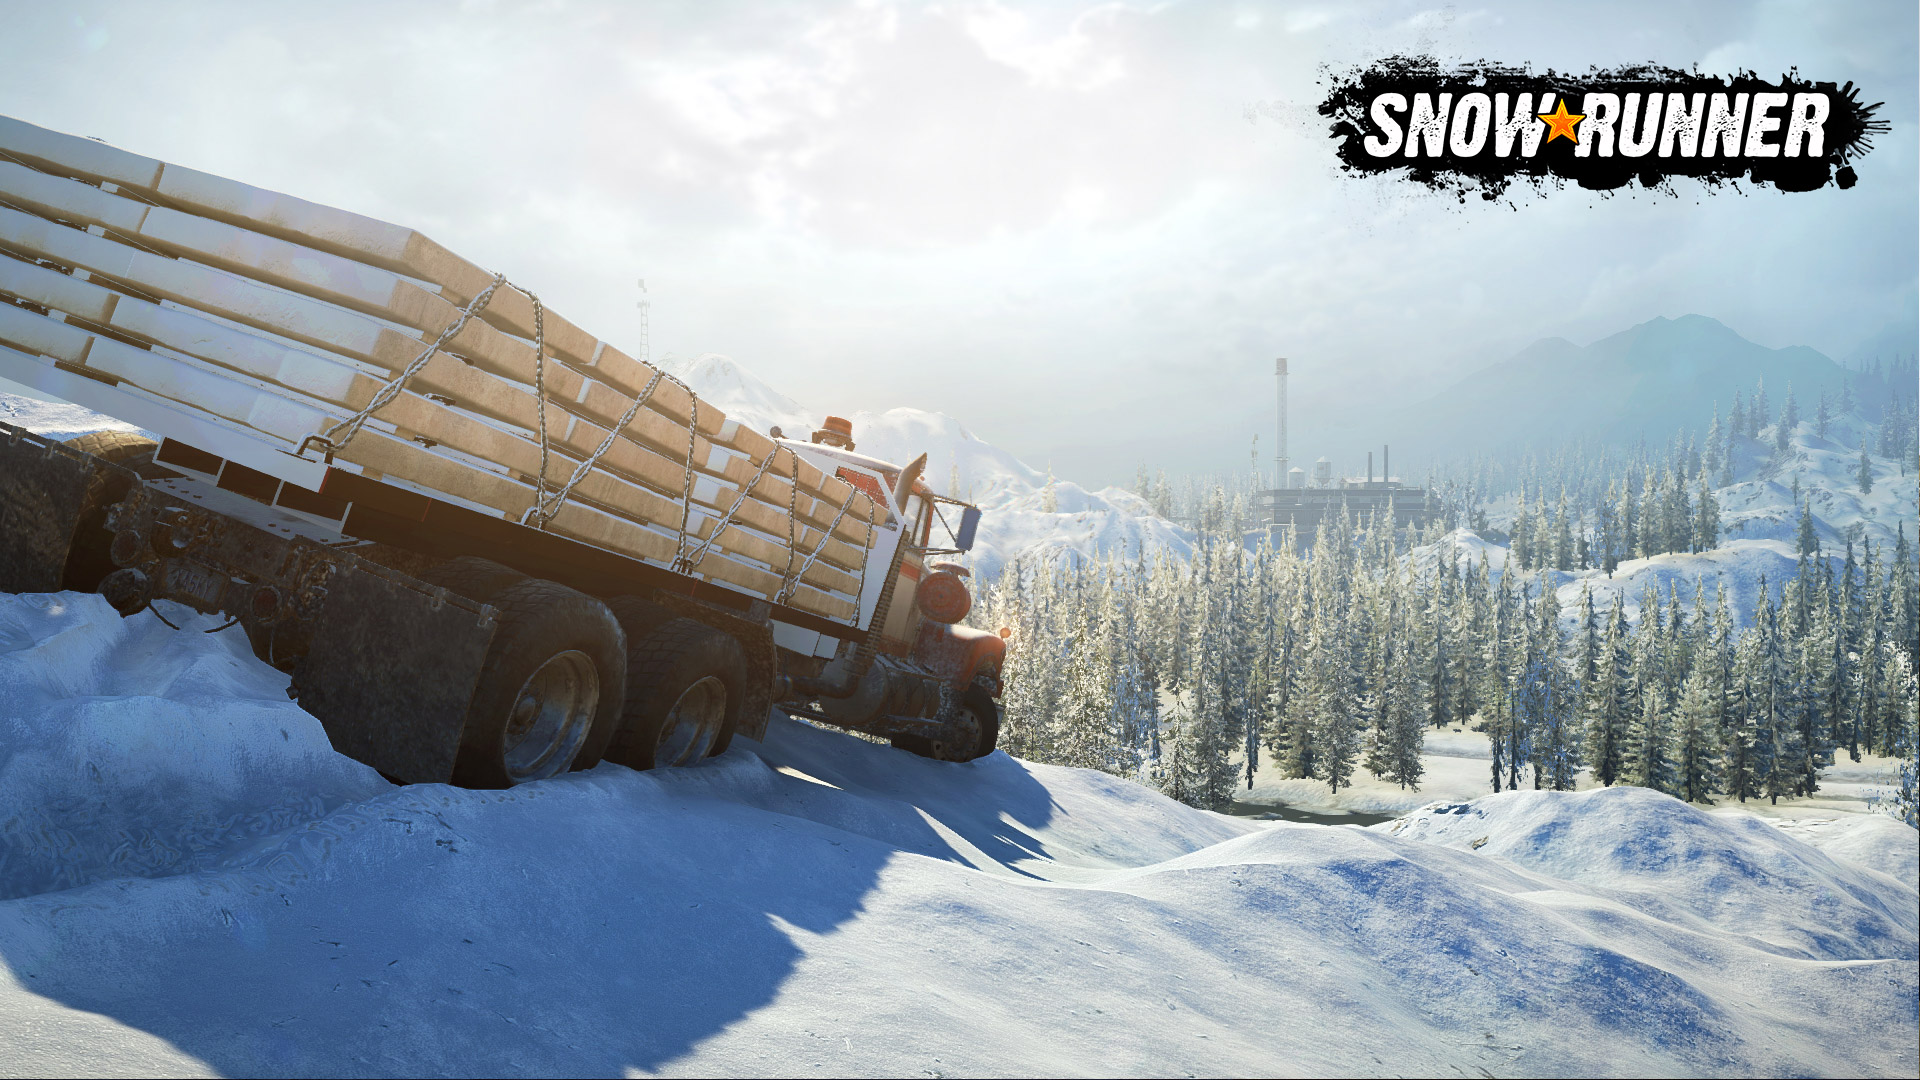 General 1920x1080 Snowrunner video games truck winter snow trees digital art